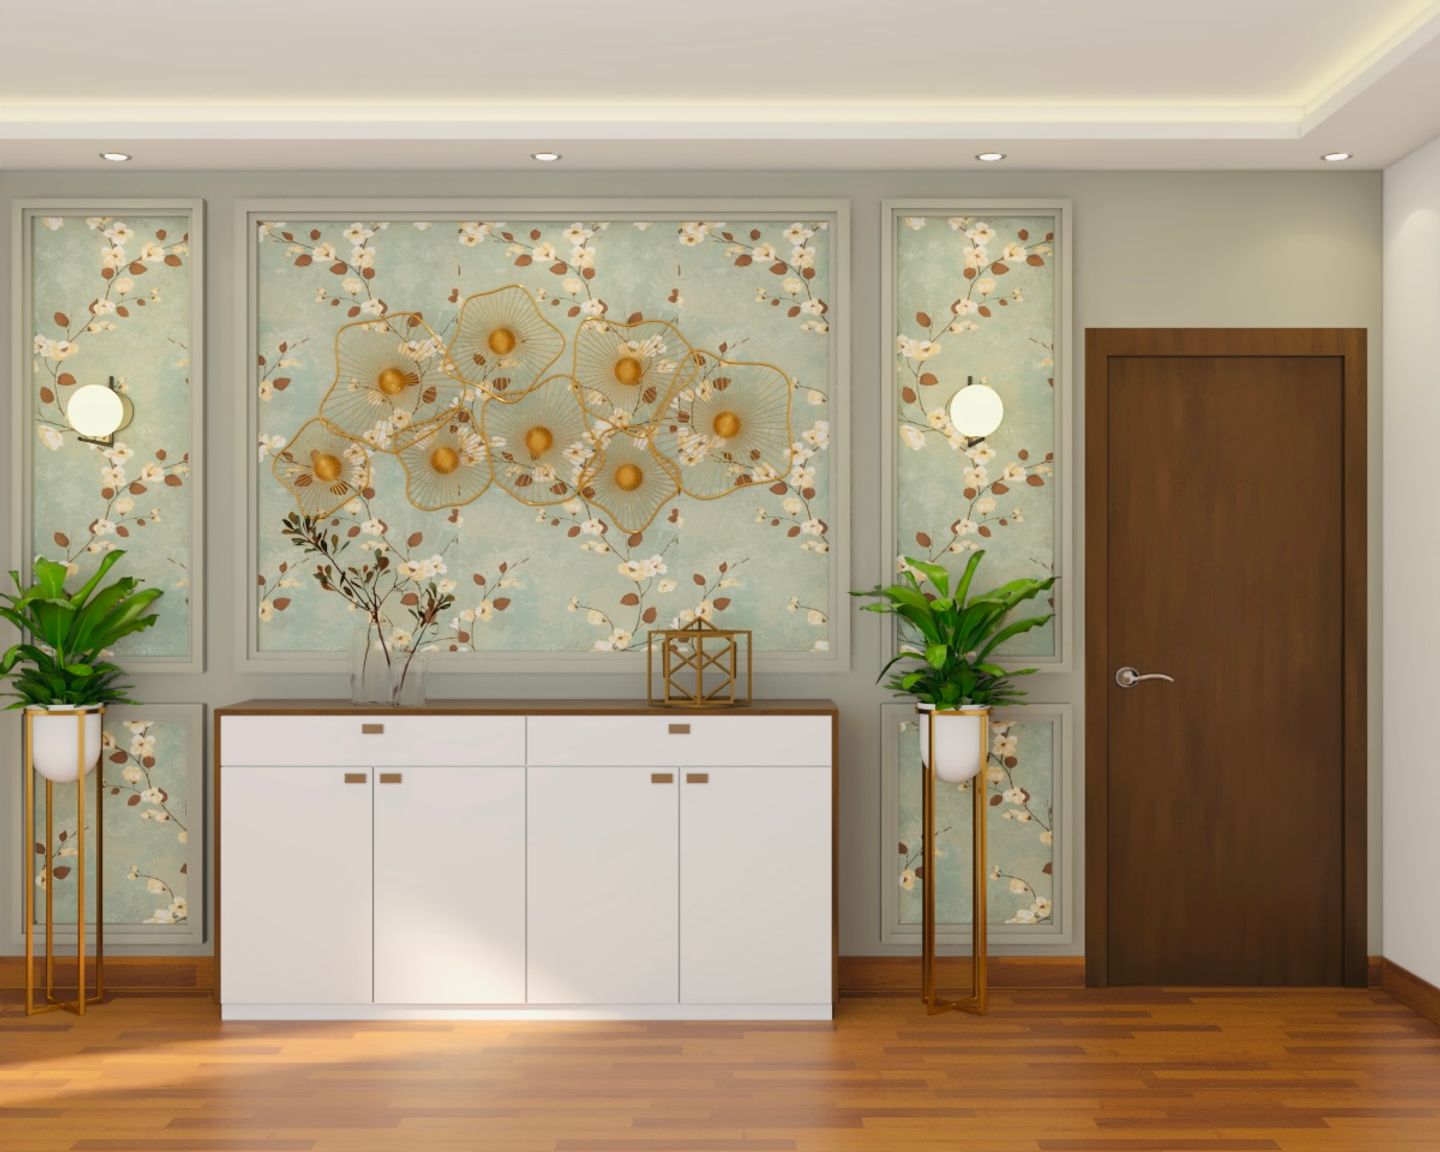 8x9 Ft Foyer Design With Foyer Design And White Storage Unit - Livspace